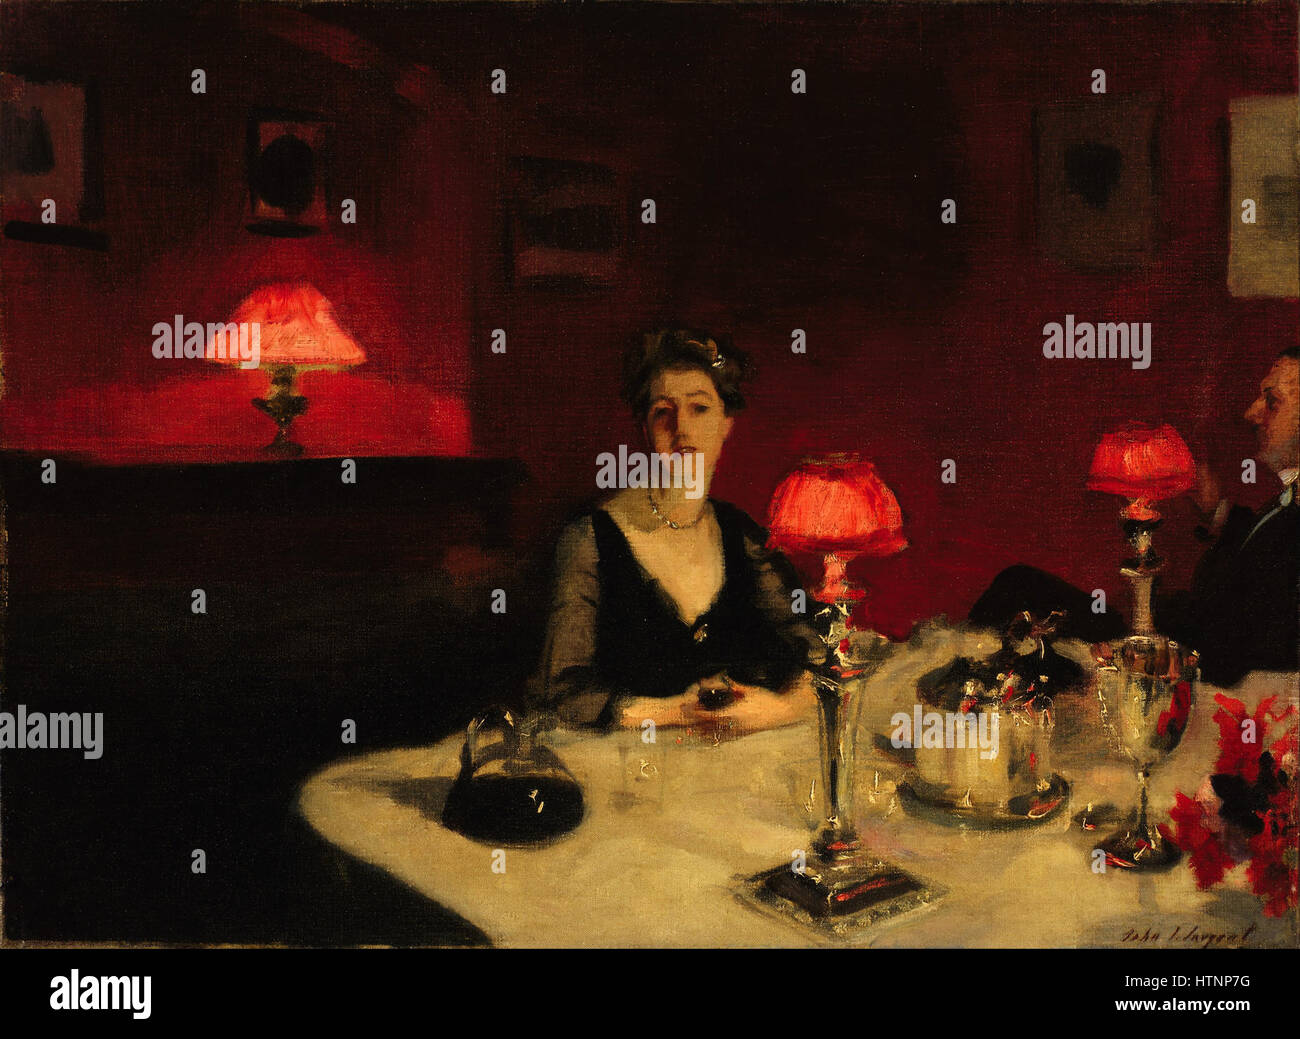 John Singer Sargent - Le Verre de Porto (A-Tisch in der Nacht) - Google Art Project Stockfoto